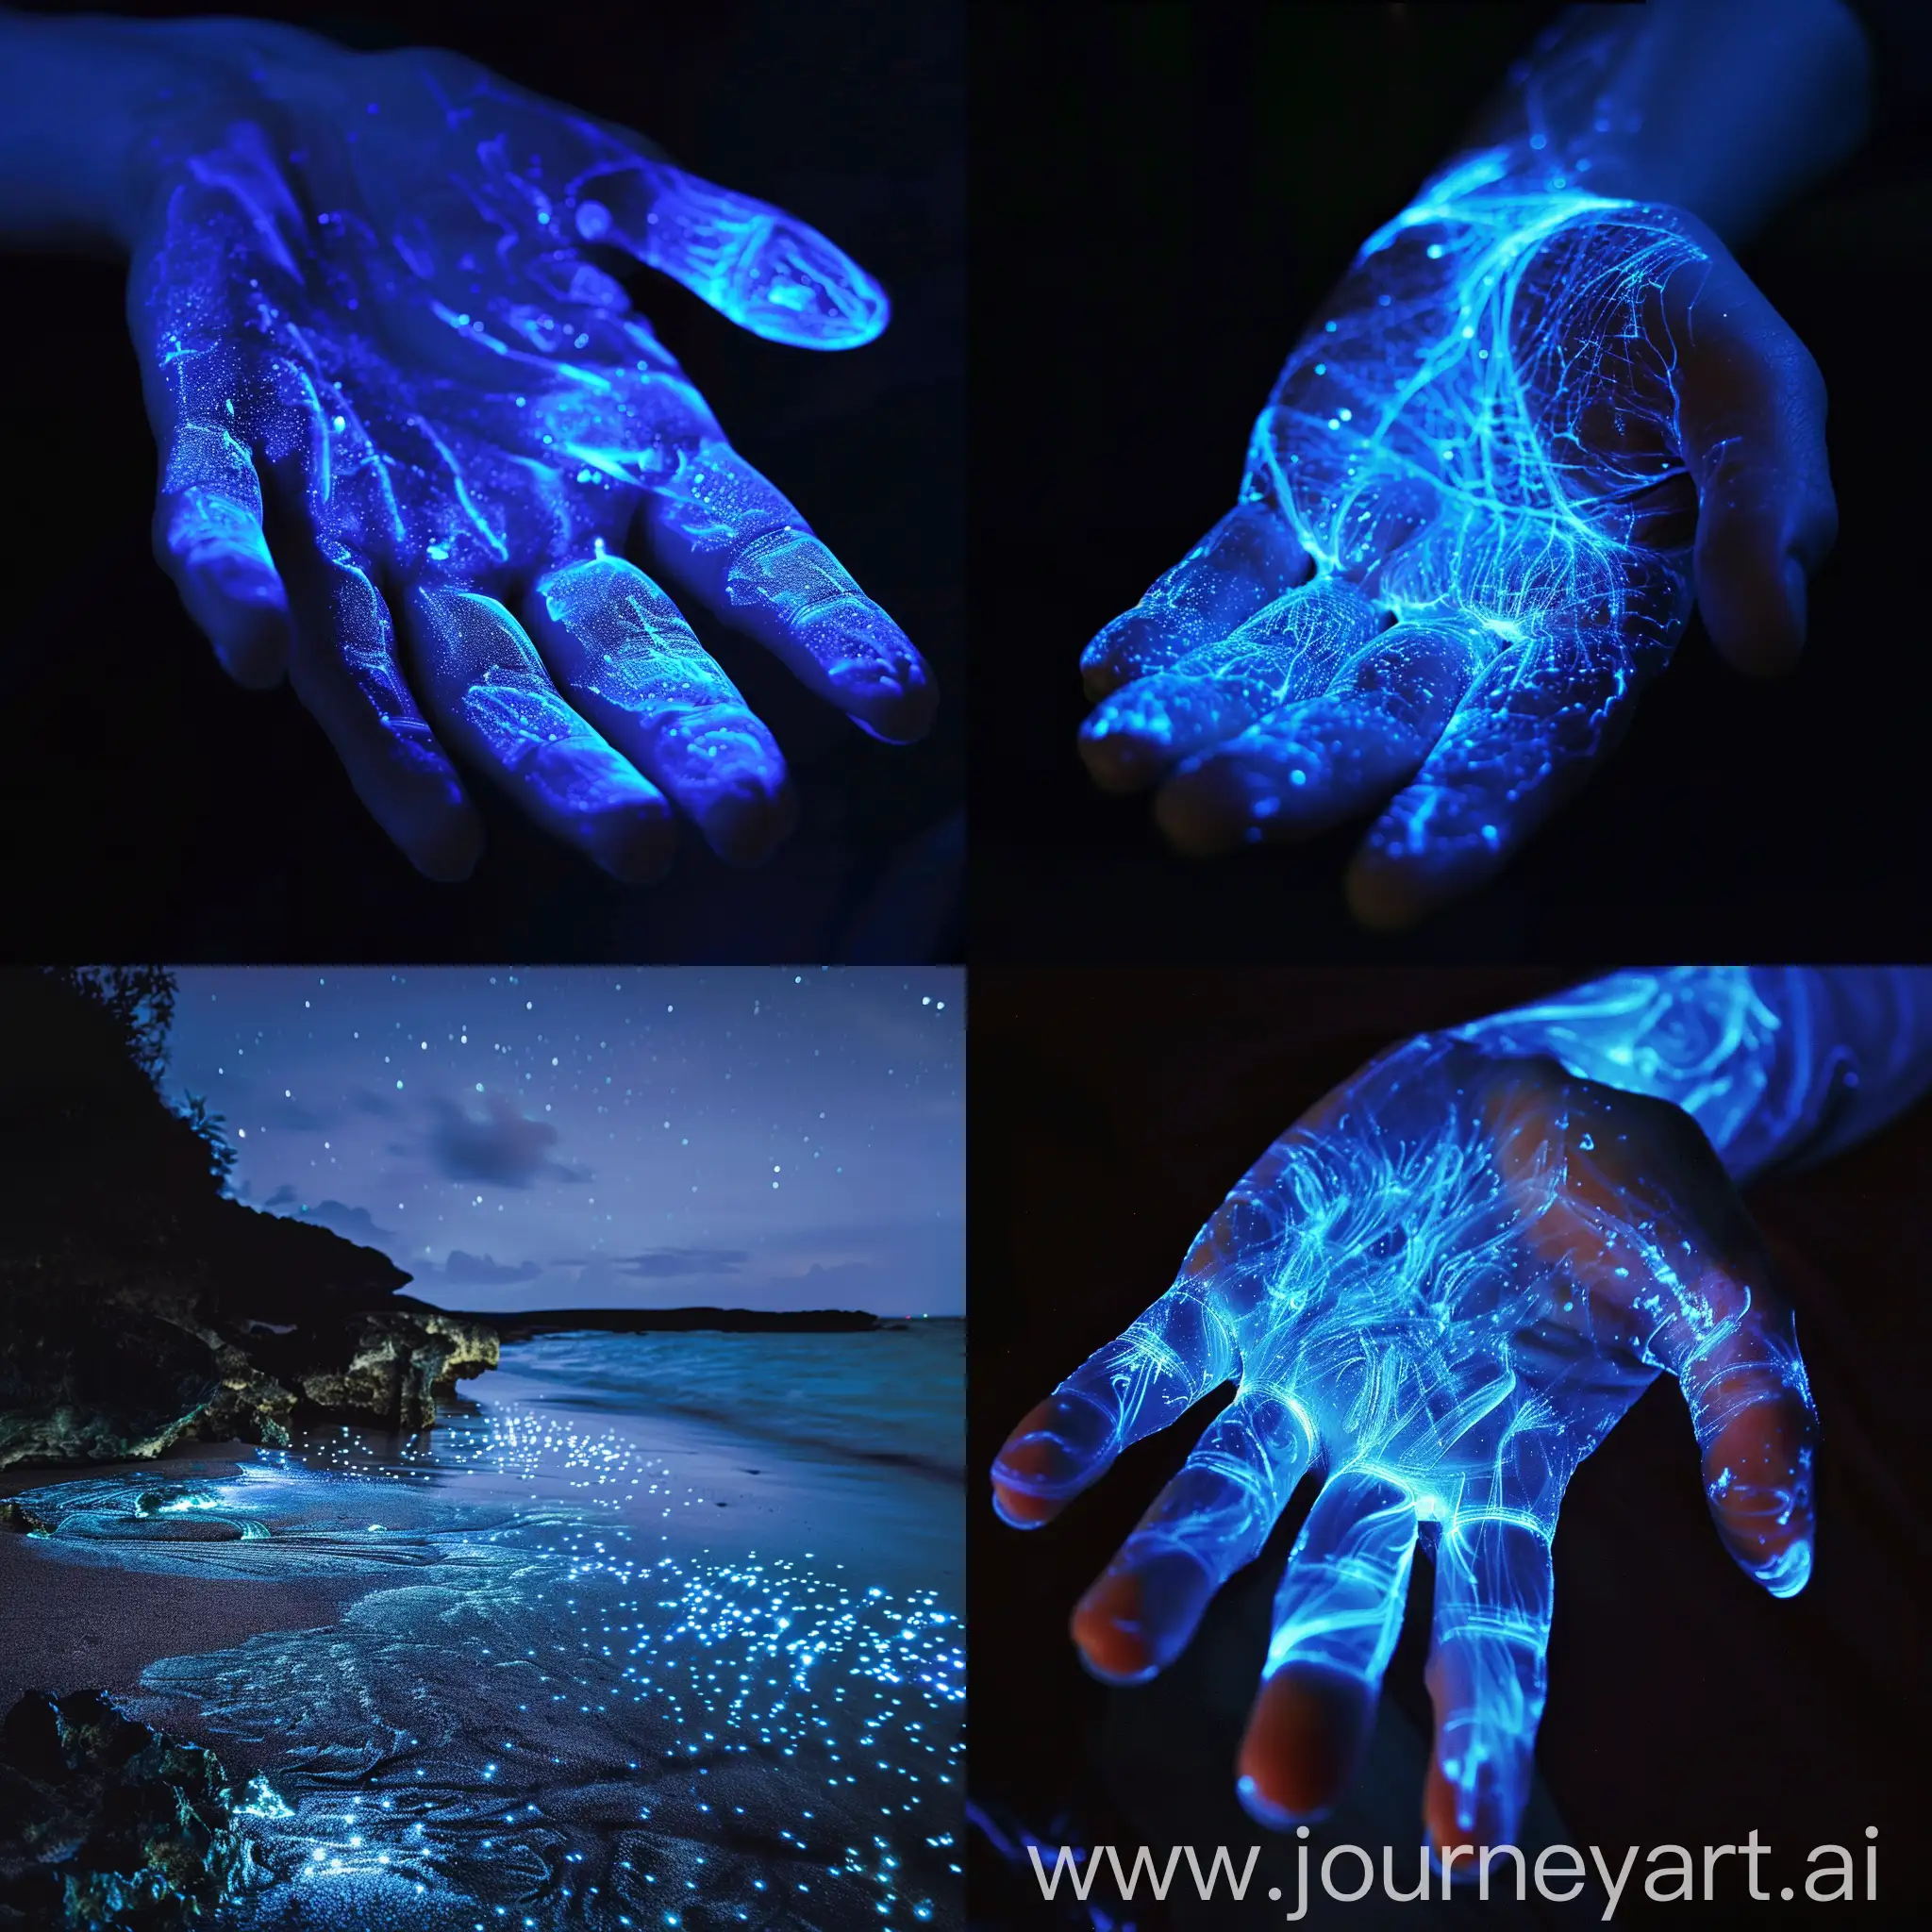 Vibrant-Photoluminescence-Artwork-with-Geometric-Patterns